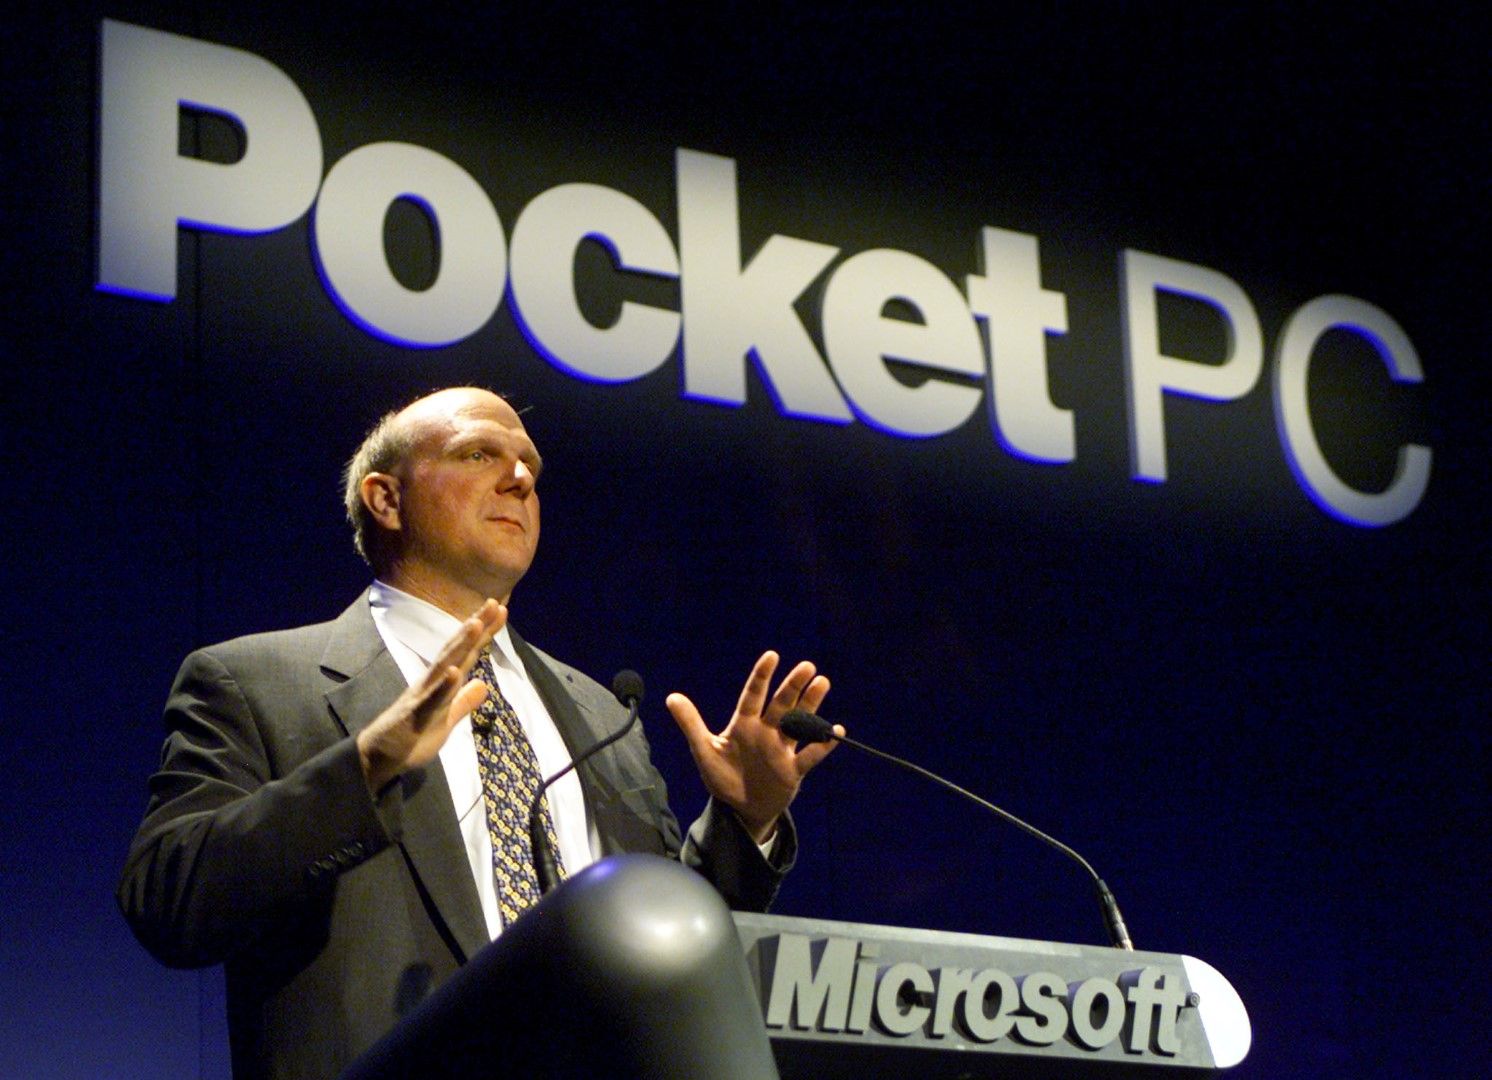 Microsoft’s Steve Ballmer presents the Pocket PC platform in 2000.